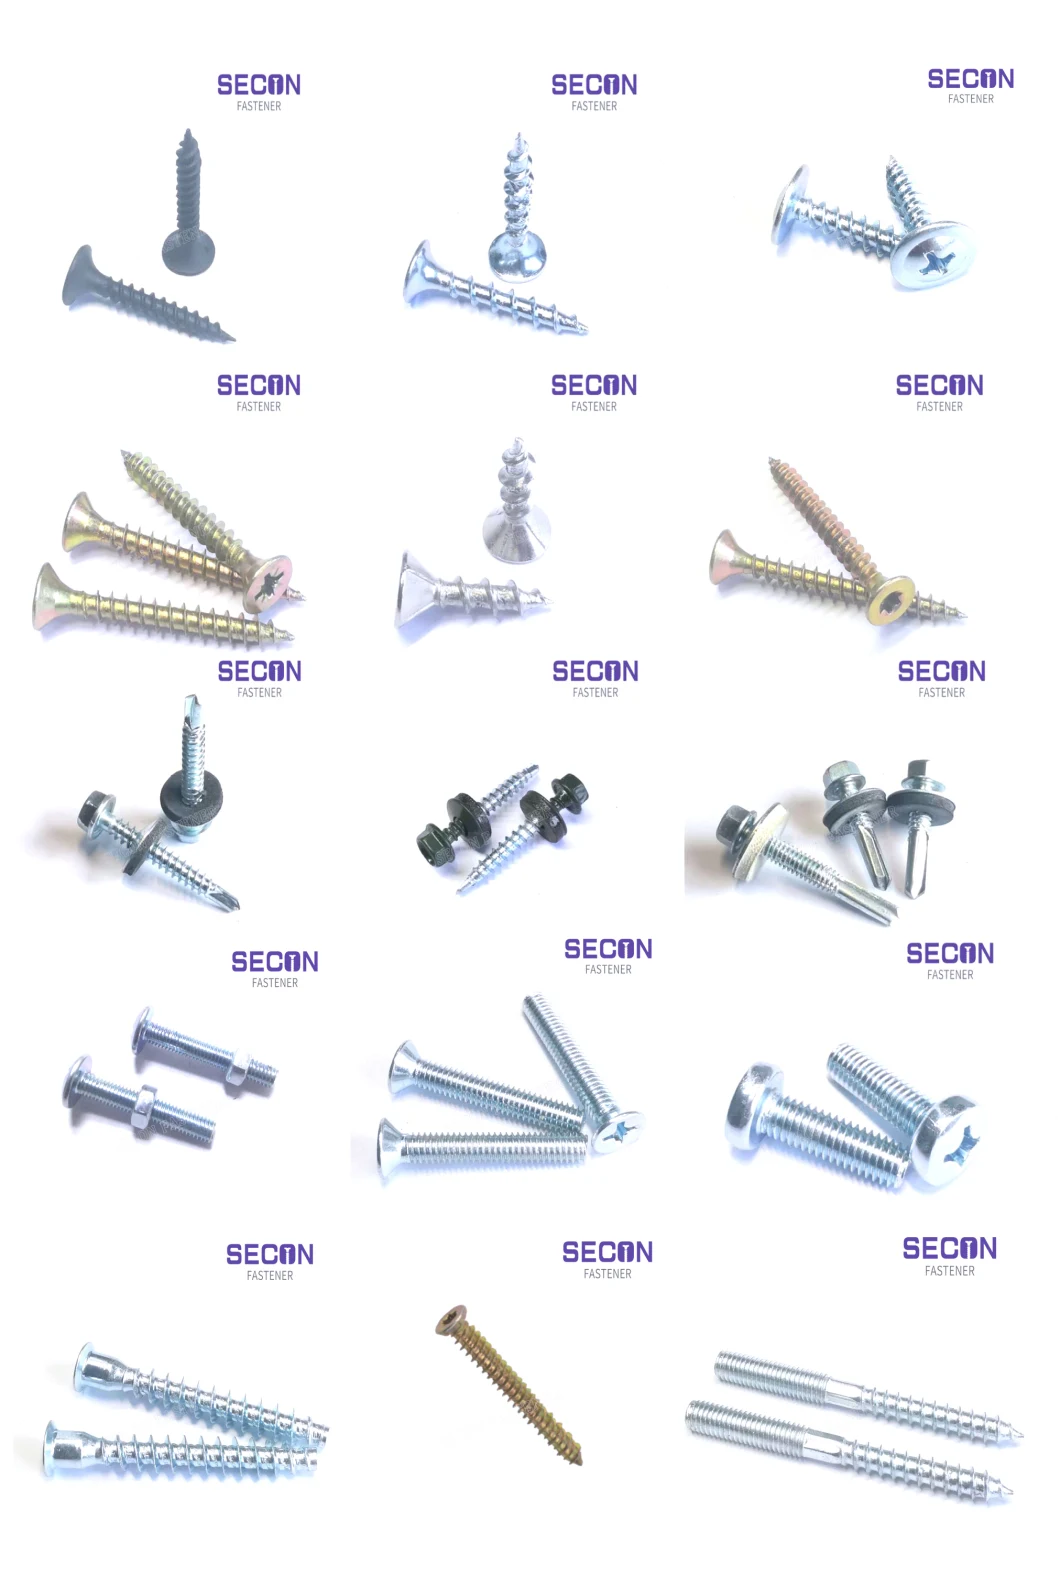 China Factory Chipboard Screw/Self Drilling Screw/Roofing Screw/Wood Screw/Drywall Tapping Screw/Machine Screw/Concrete Screw/Confirmat Screw/Tornillo/DIN571